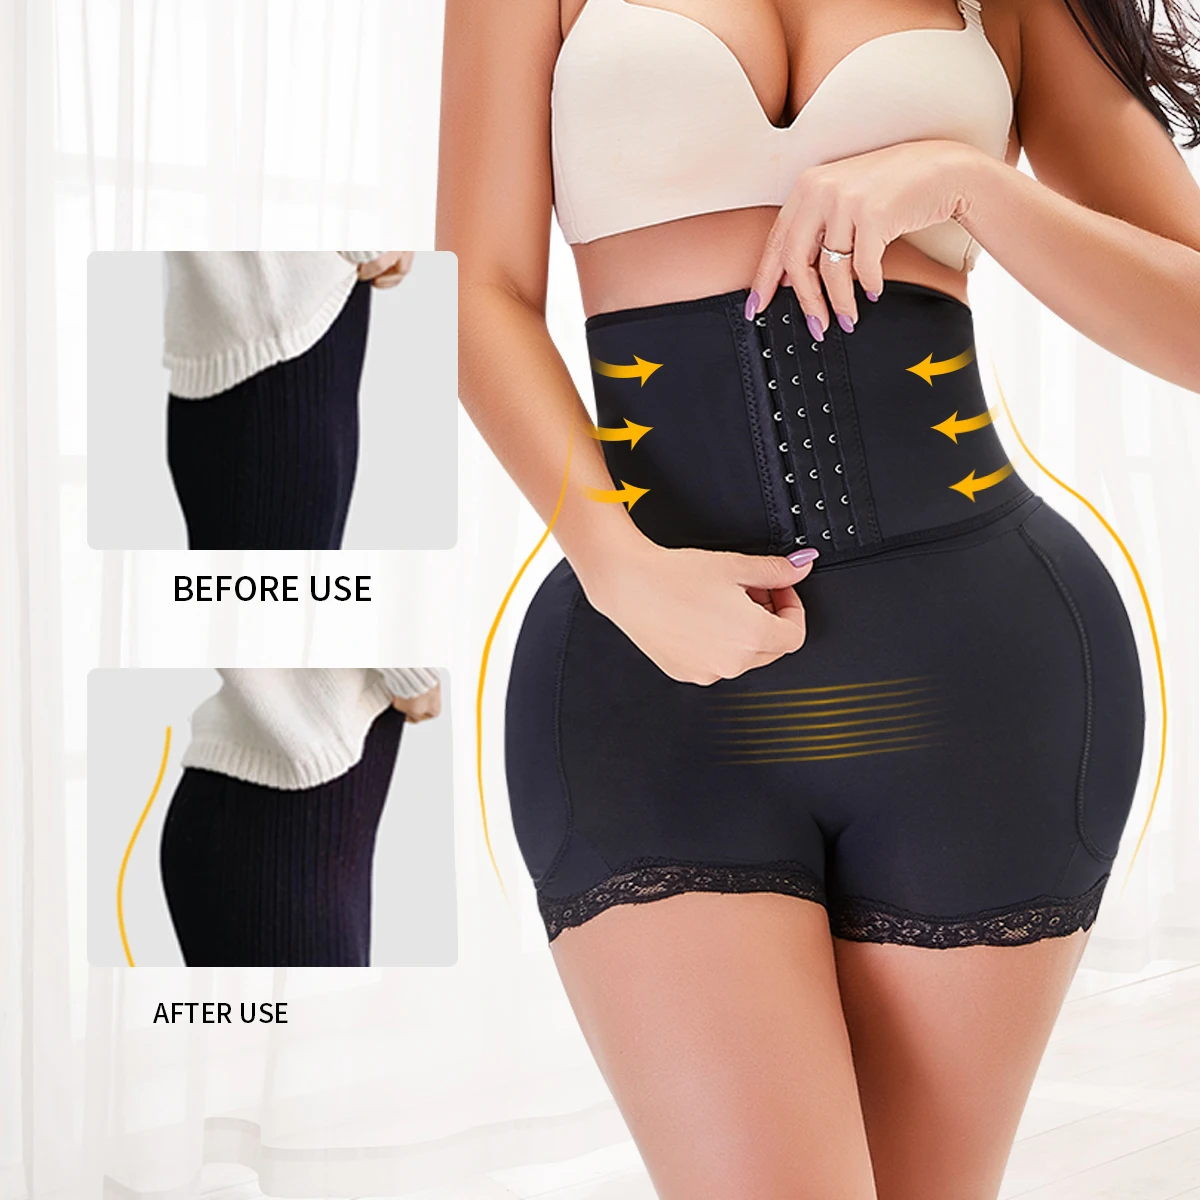 US Faja Colombiana High Waisted Butt Lifter Girdle Short Strapless Tummy Control